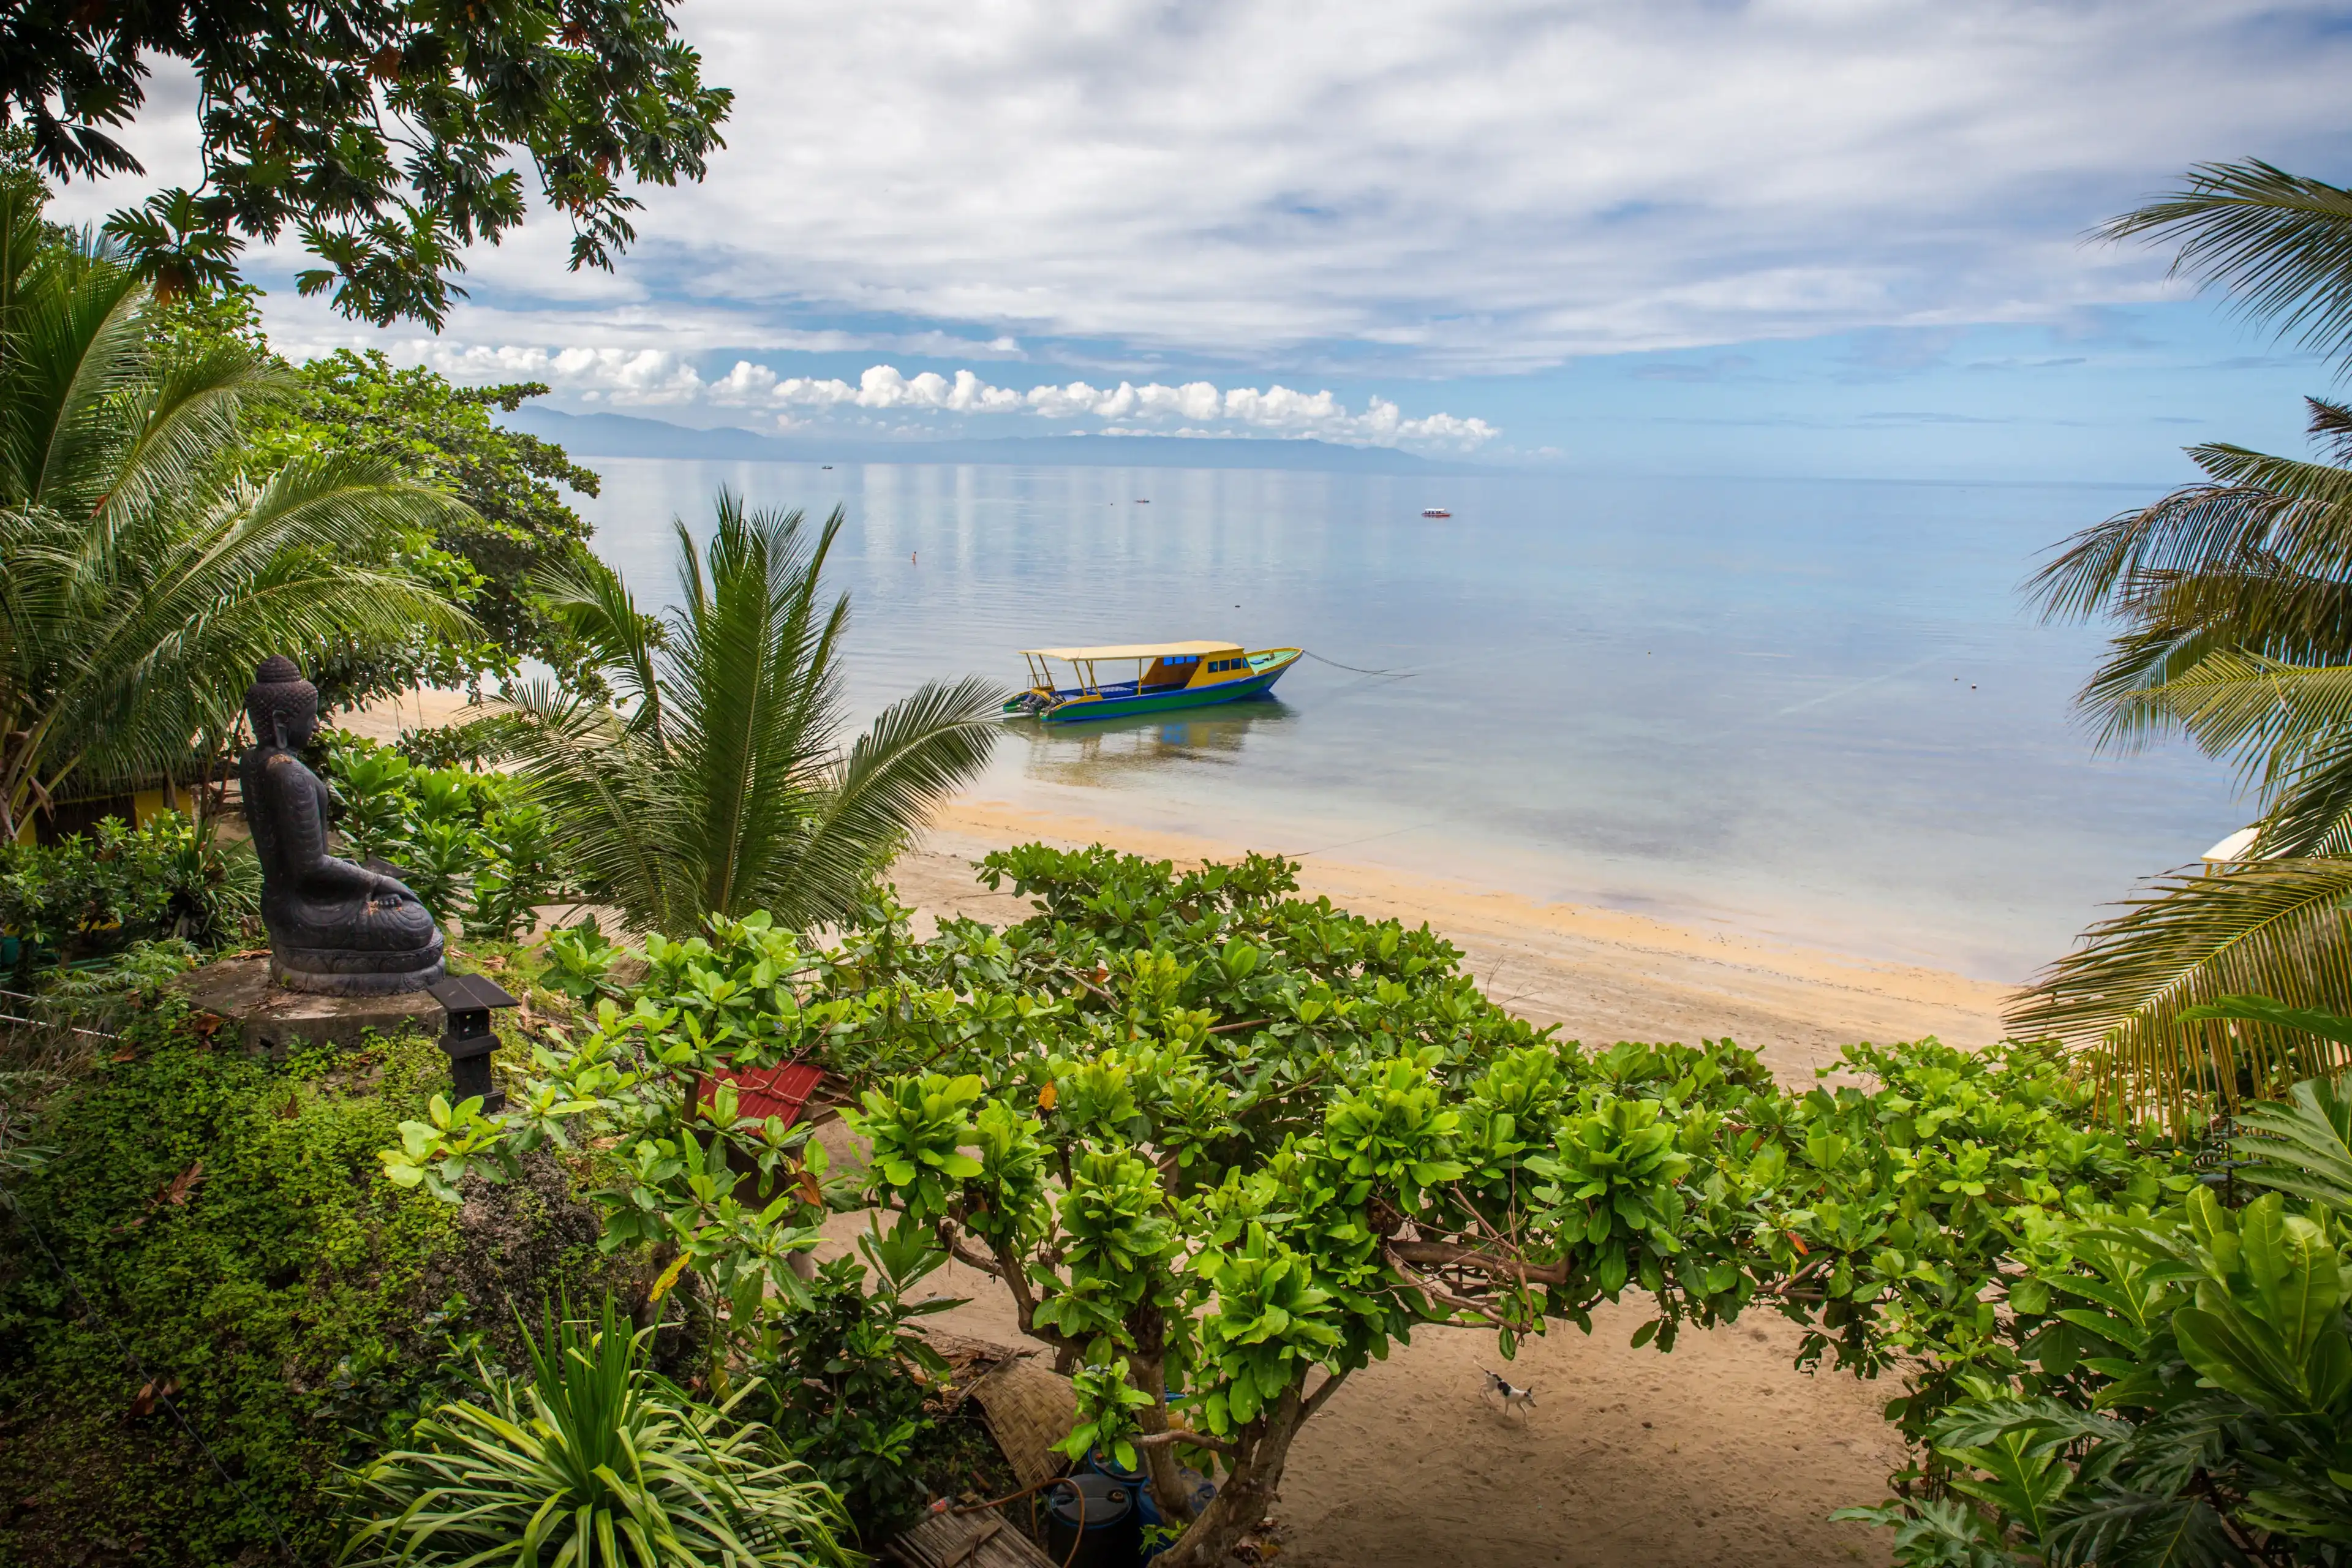 Paradise view at Bunaken Beach, Manado, North Sulawesi - Indonesia